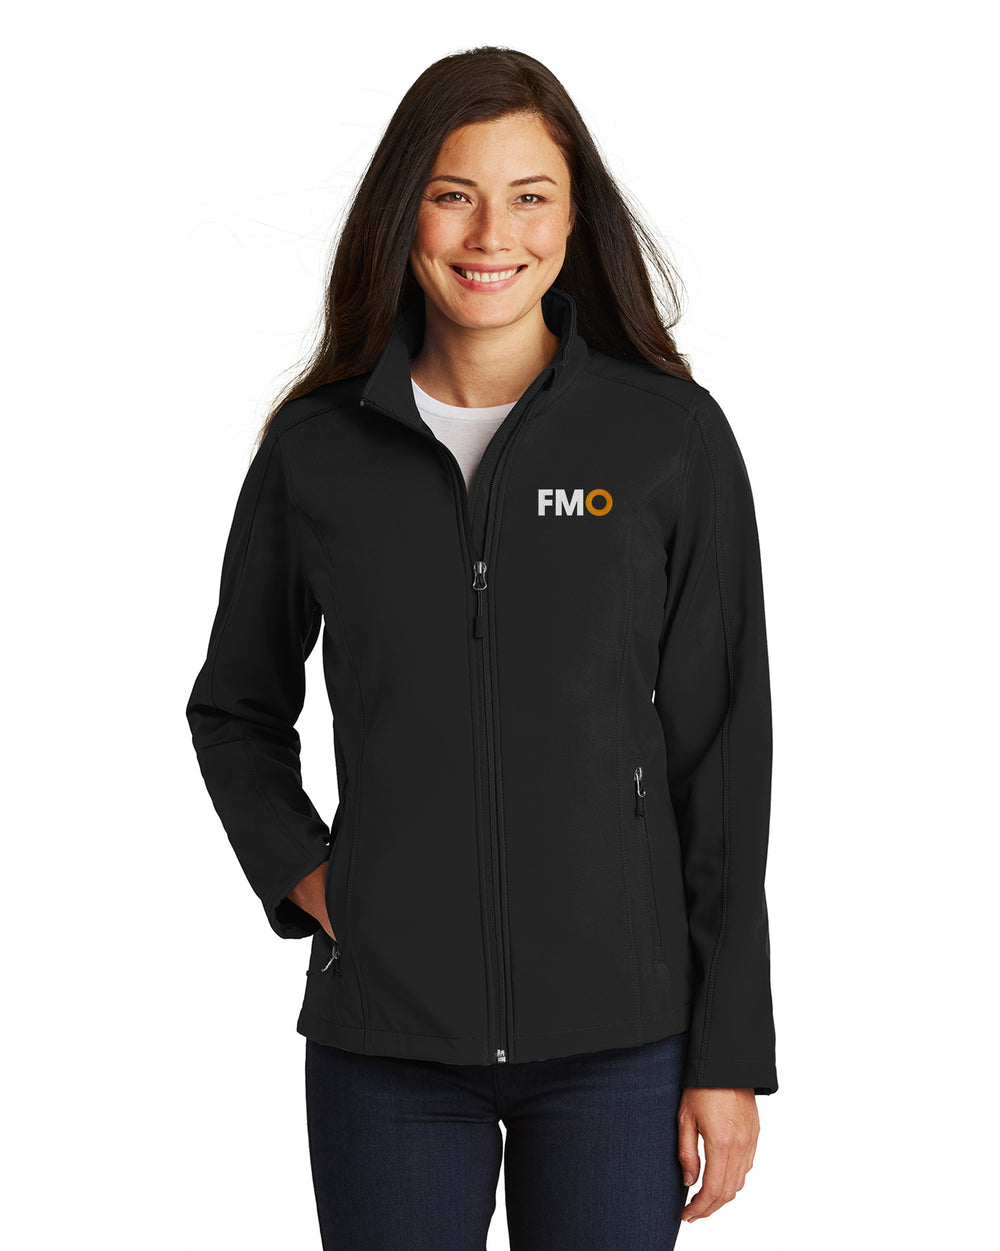 FMOK Outlet - Port Authority Ladies Core Soft Shell Jacket - L317